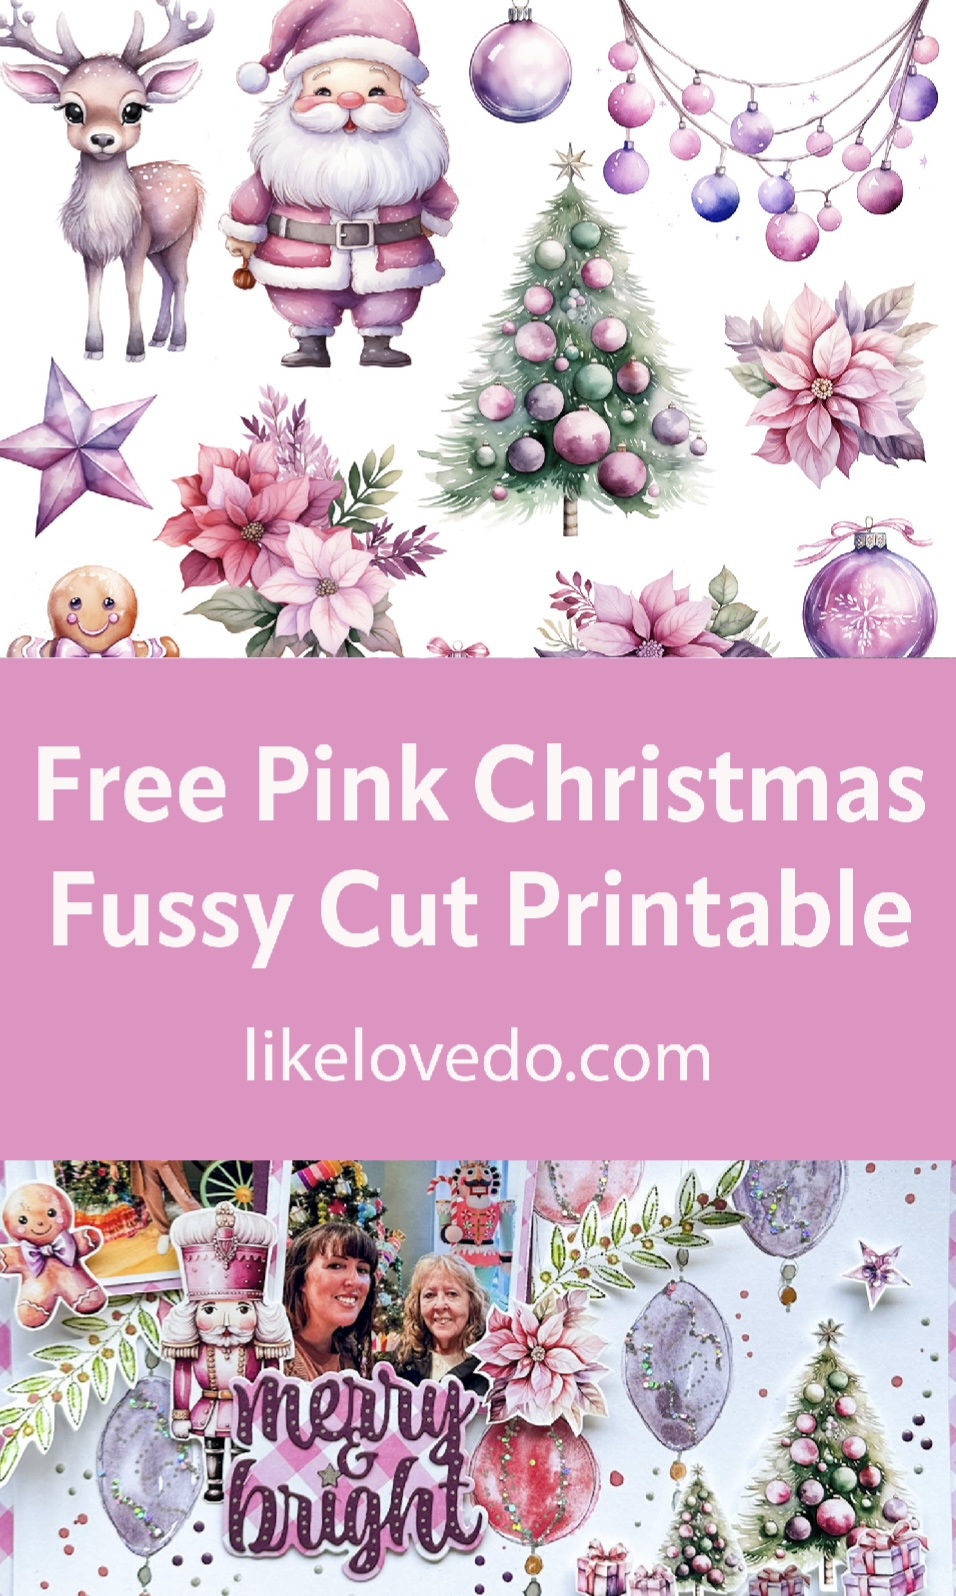 Free Pink Christmas ephemera for fussy cutting pin image